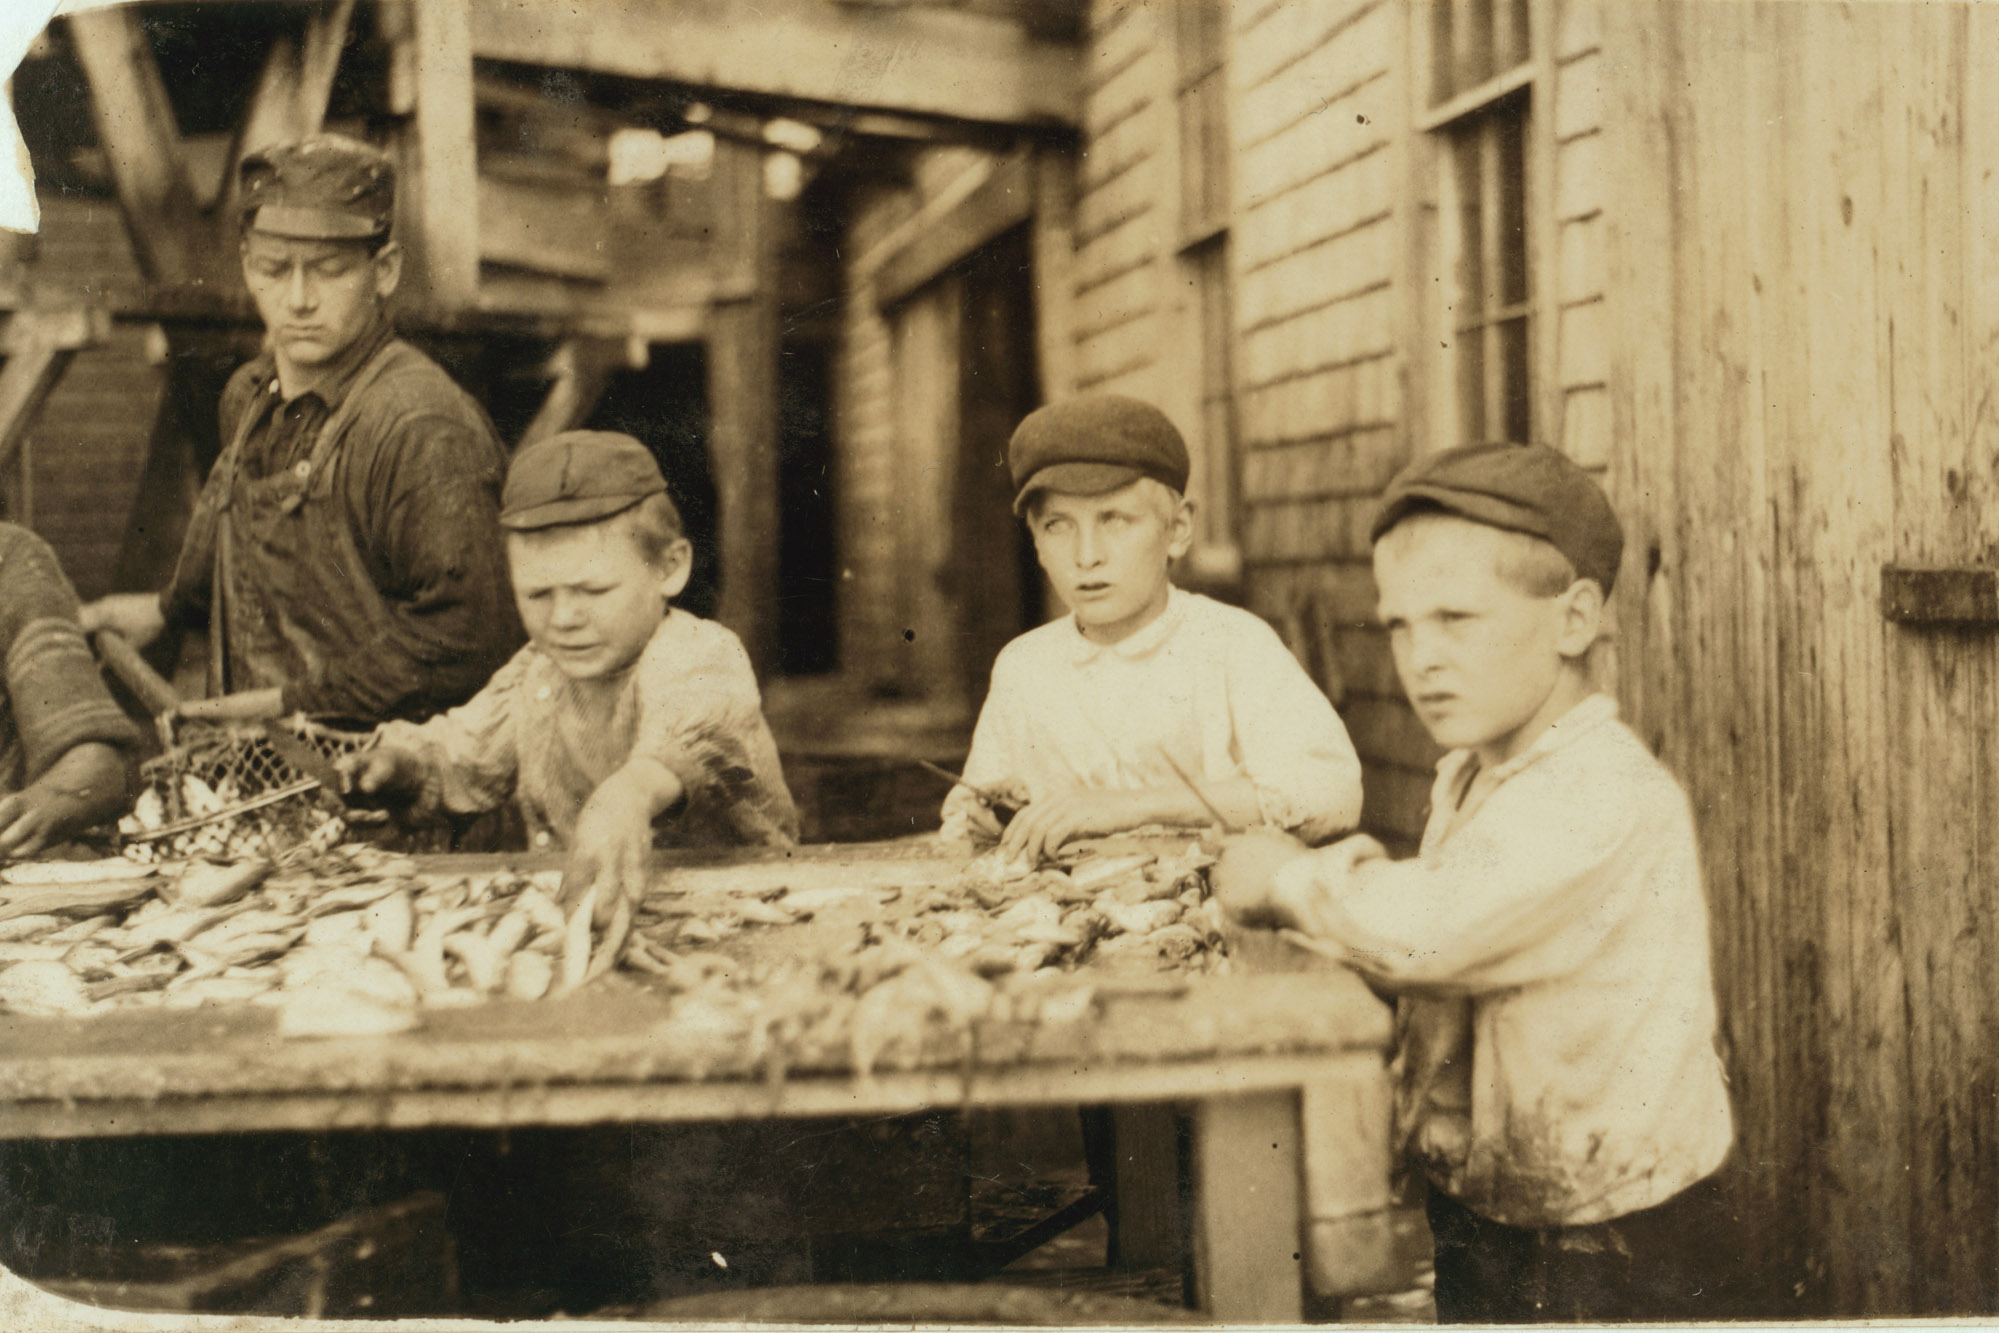 child labour in the 19th century